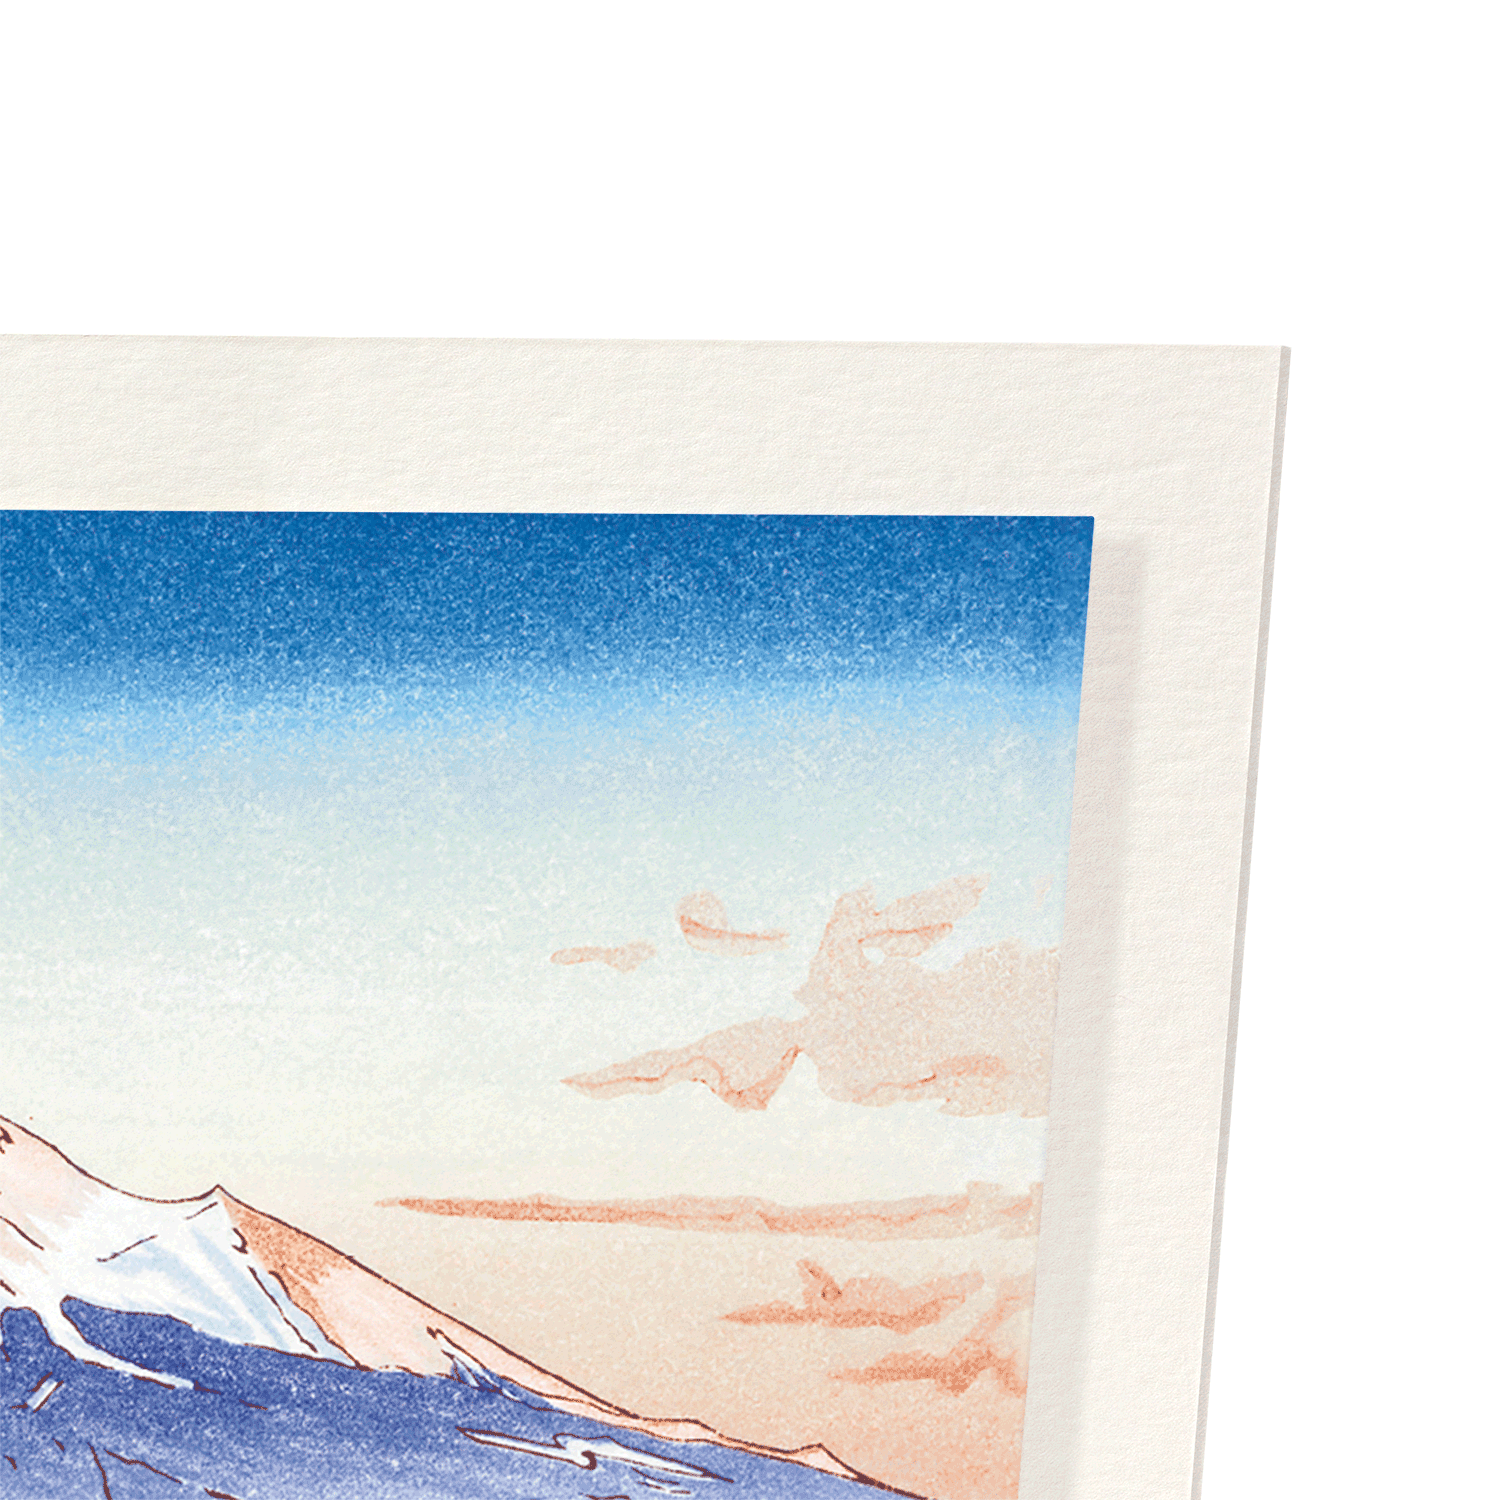 MOUNT FUJI FROM THE COAST OF HAGOROMO: Japanese Art Print